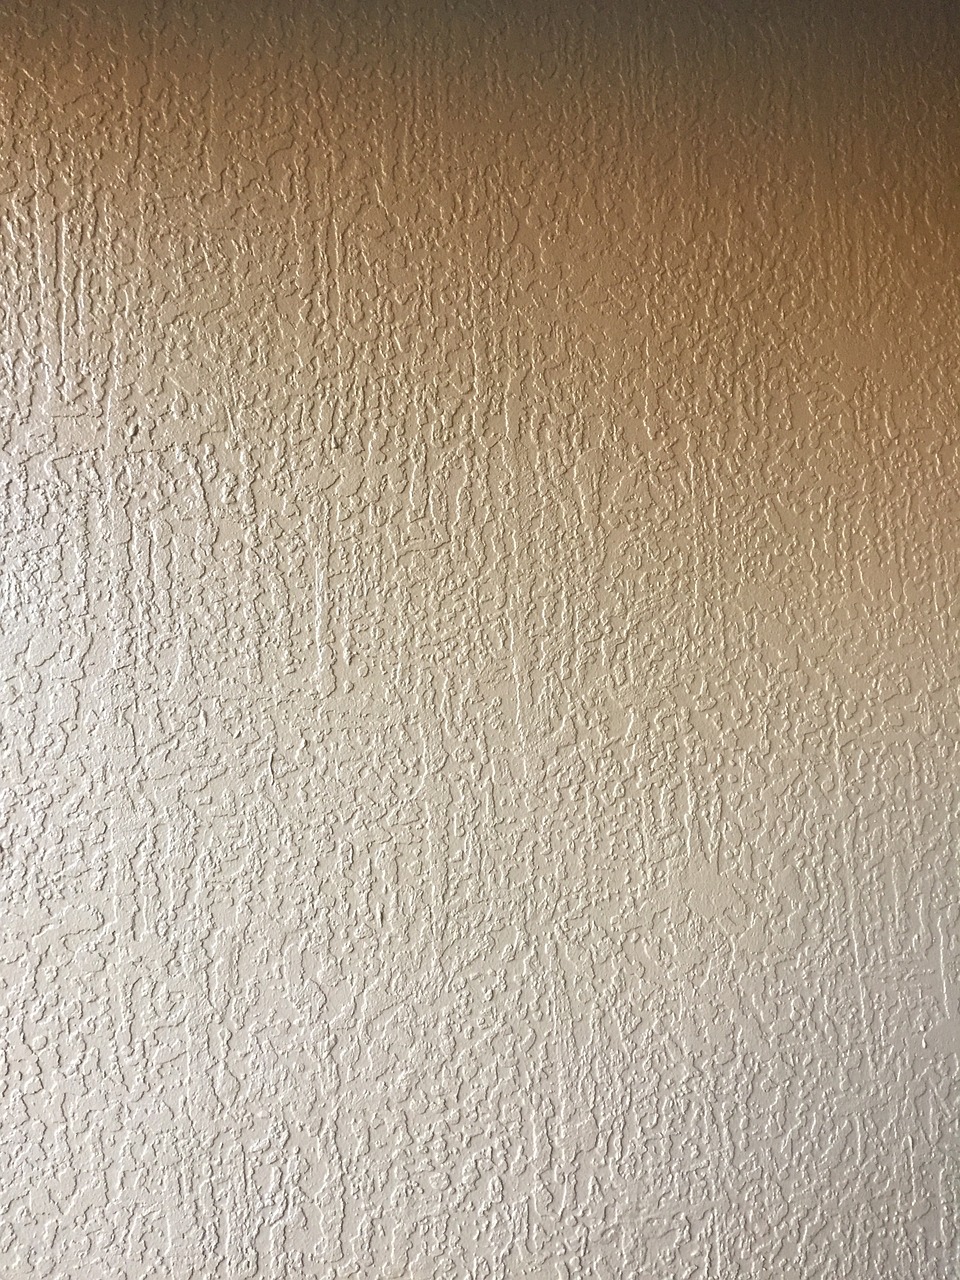 wall stucco texture free photo